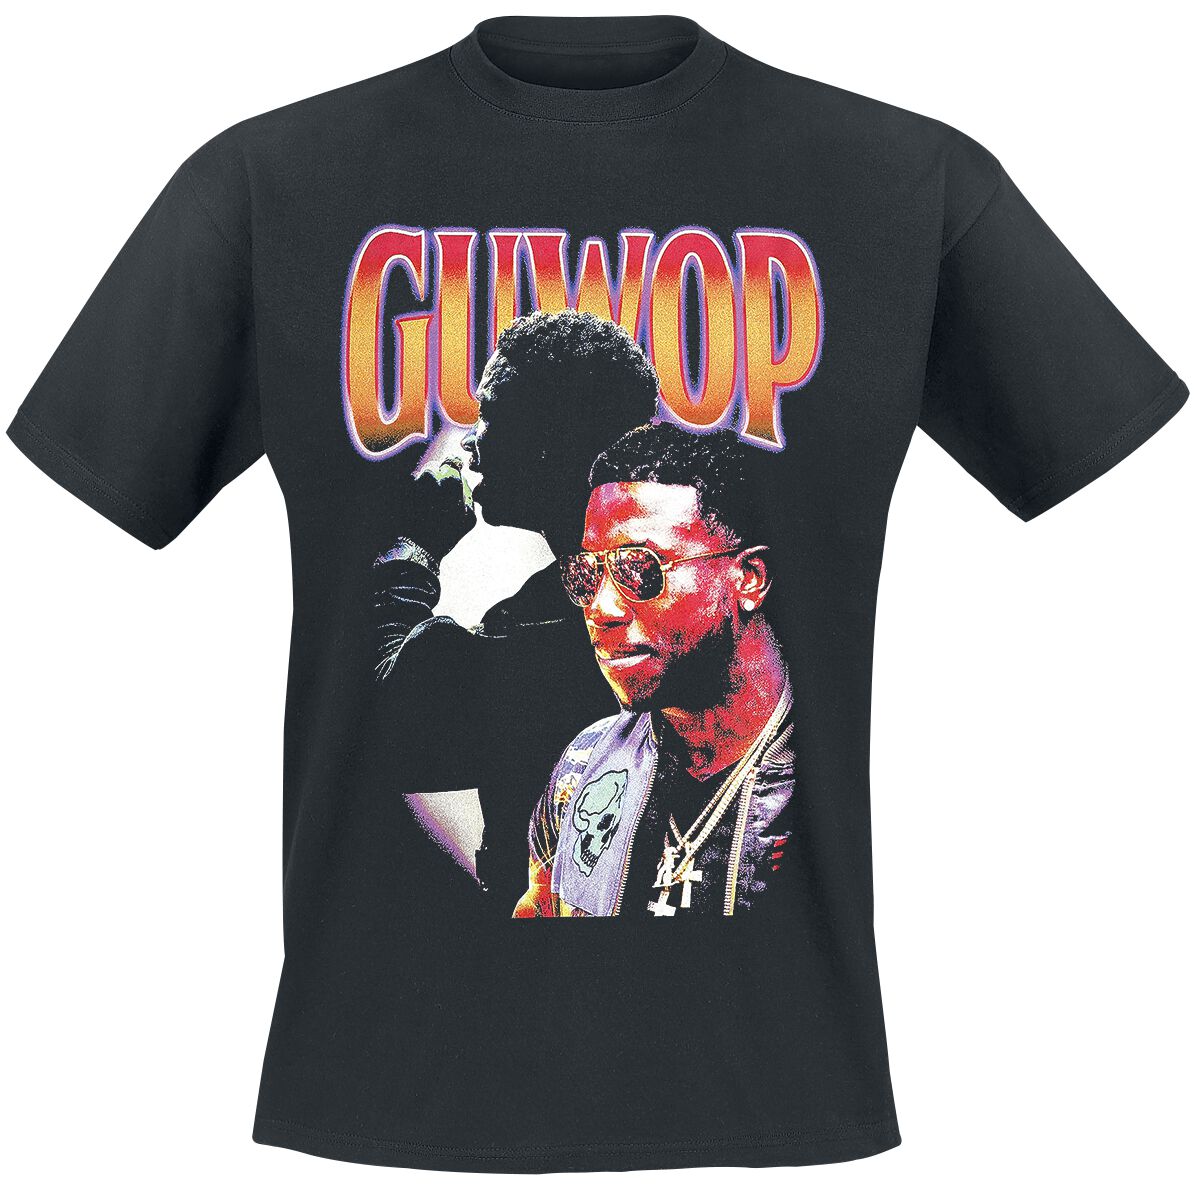 Image of Gucci Mane Gucci Collage T-Shirt schwarz